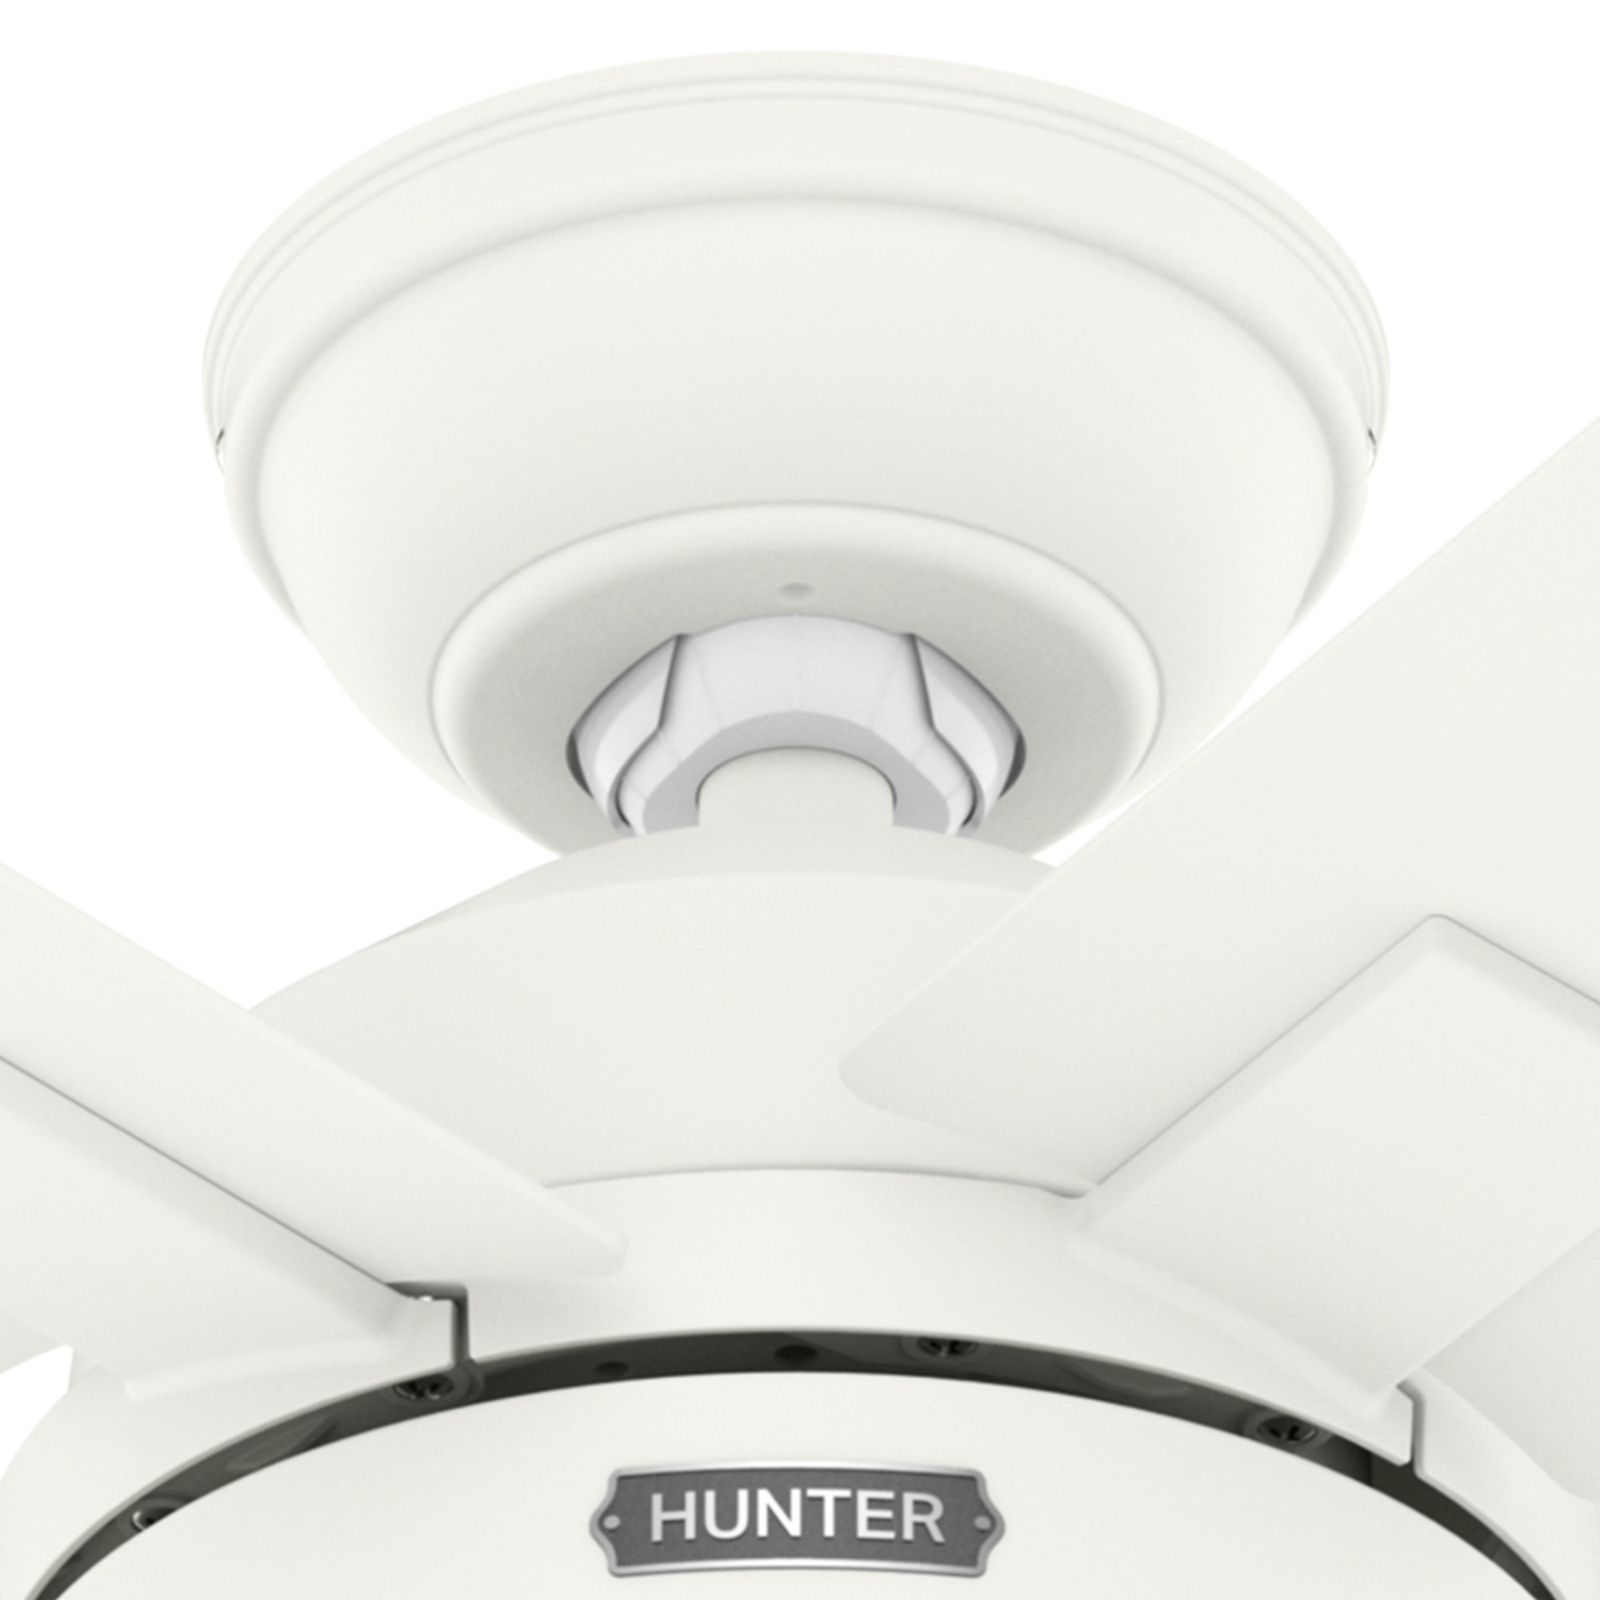 Hunter Zeal ceiling fan AC lamp E27 white